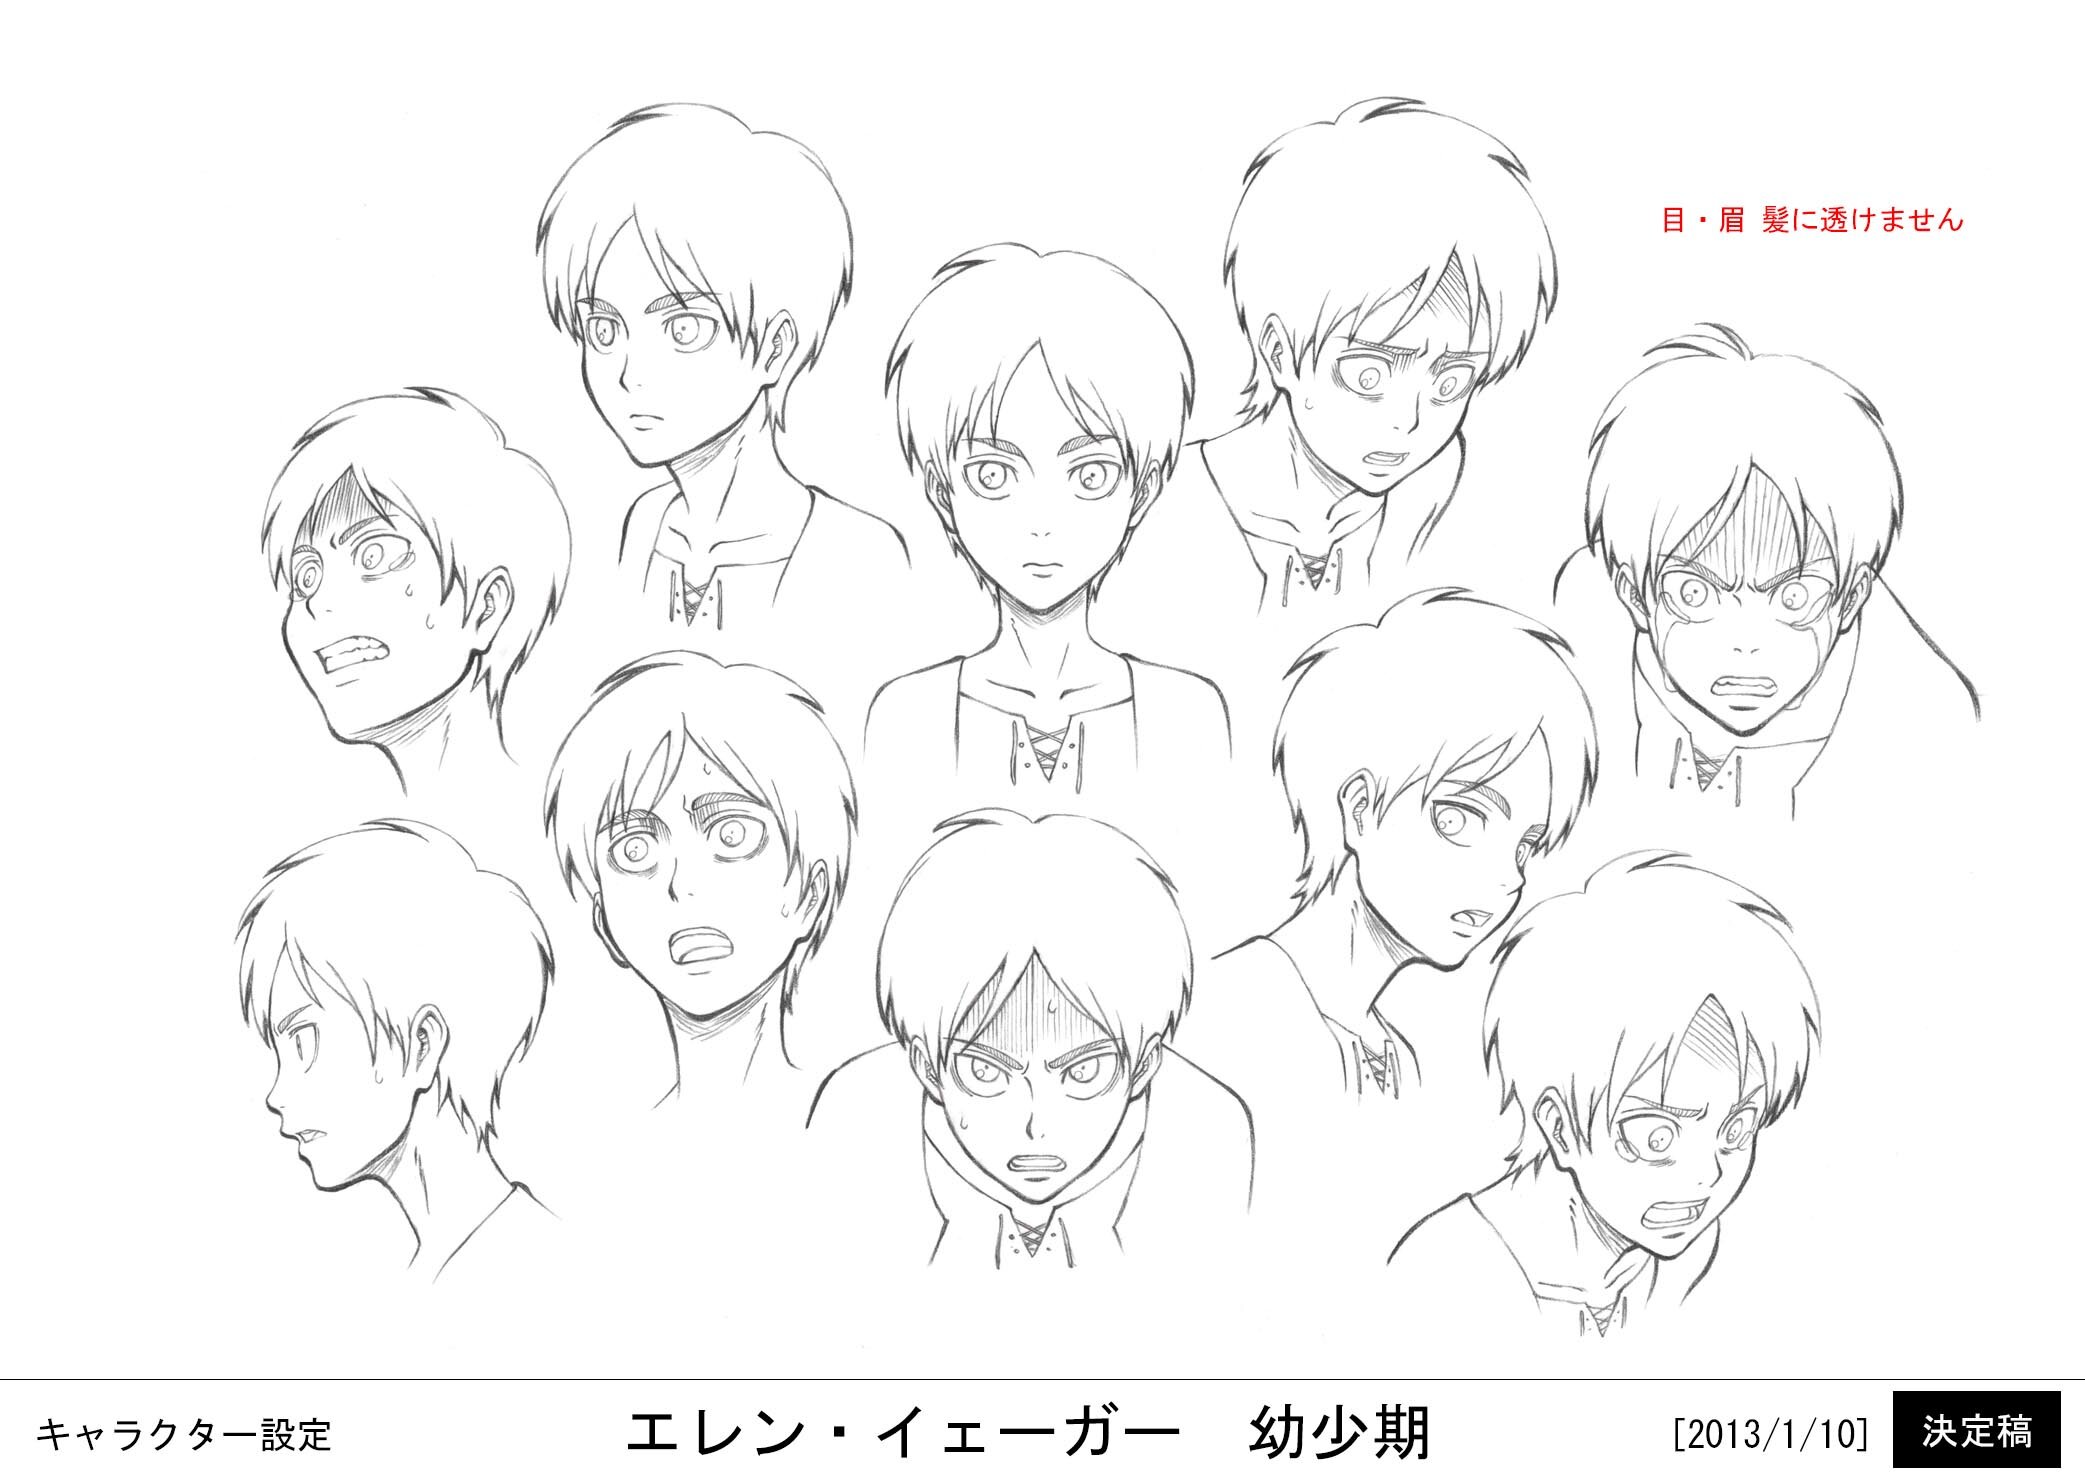 Classic - The Art of Shingeki no Kyojin - Attack on Titan - 160+ Original  Sketches